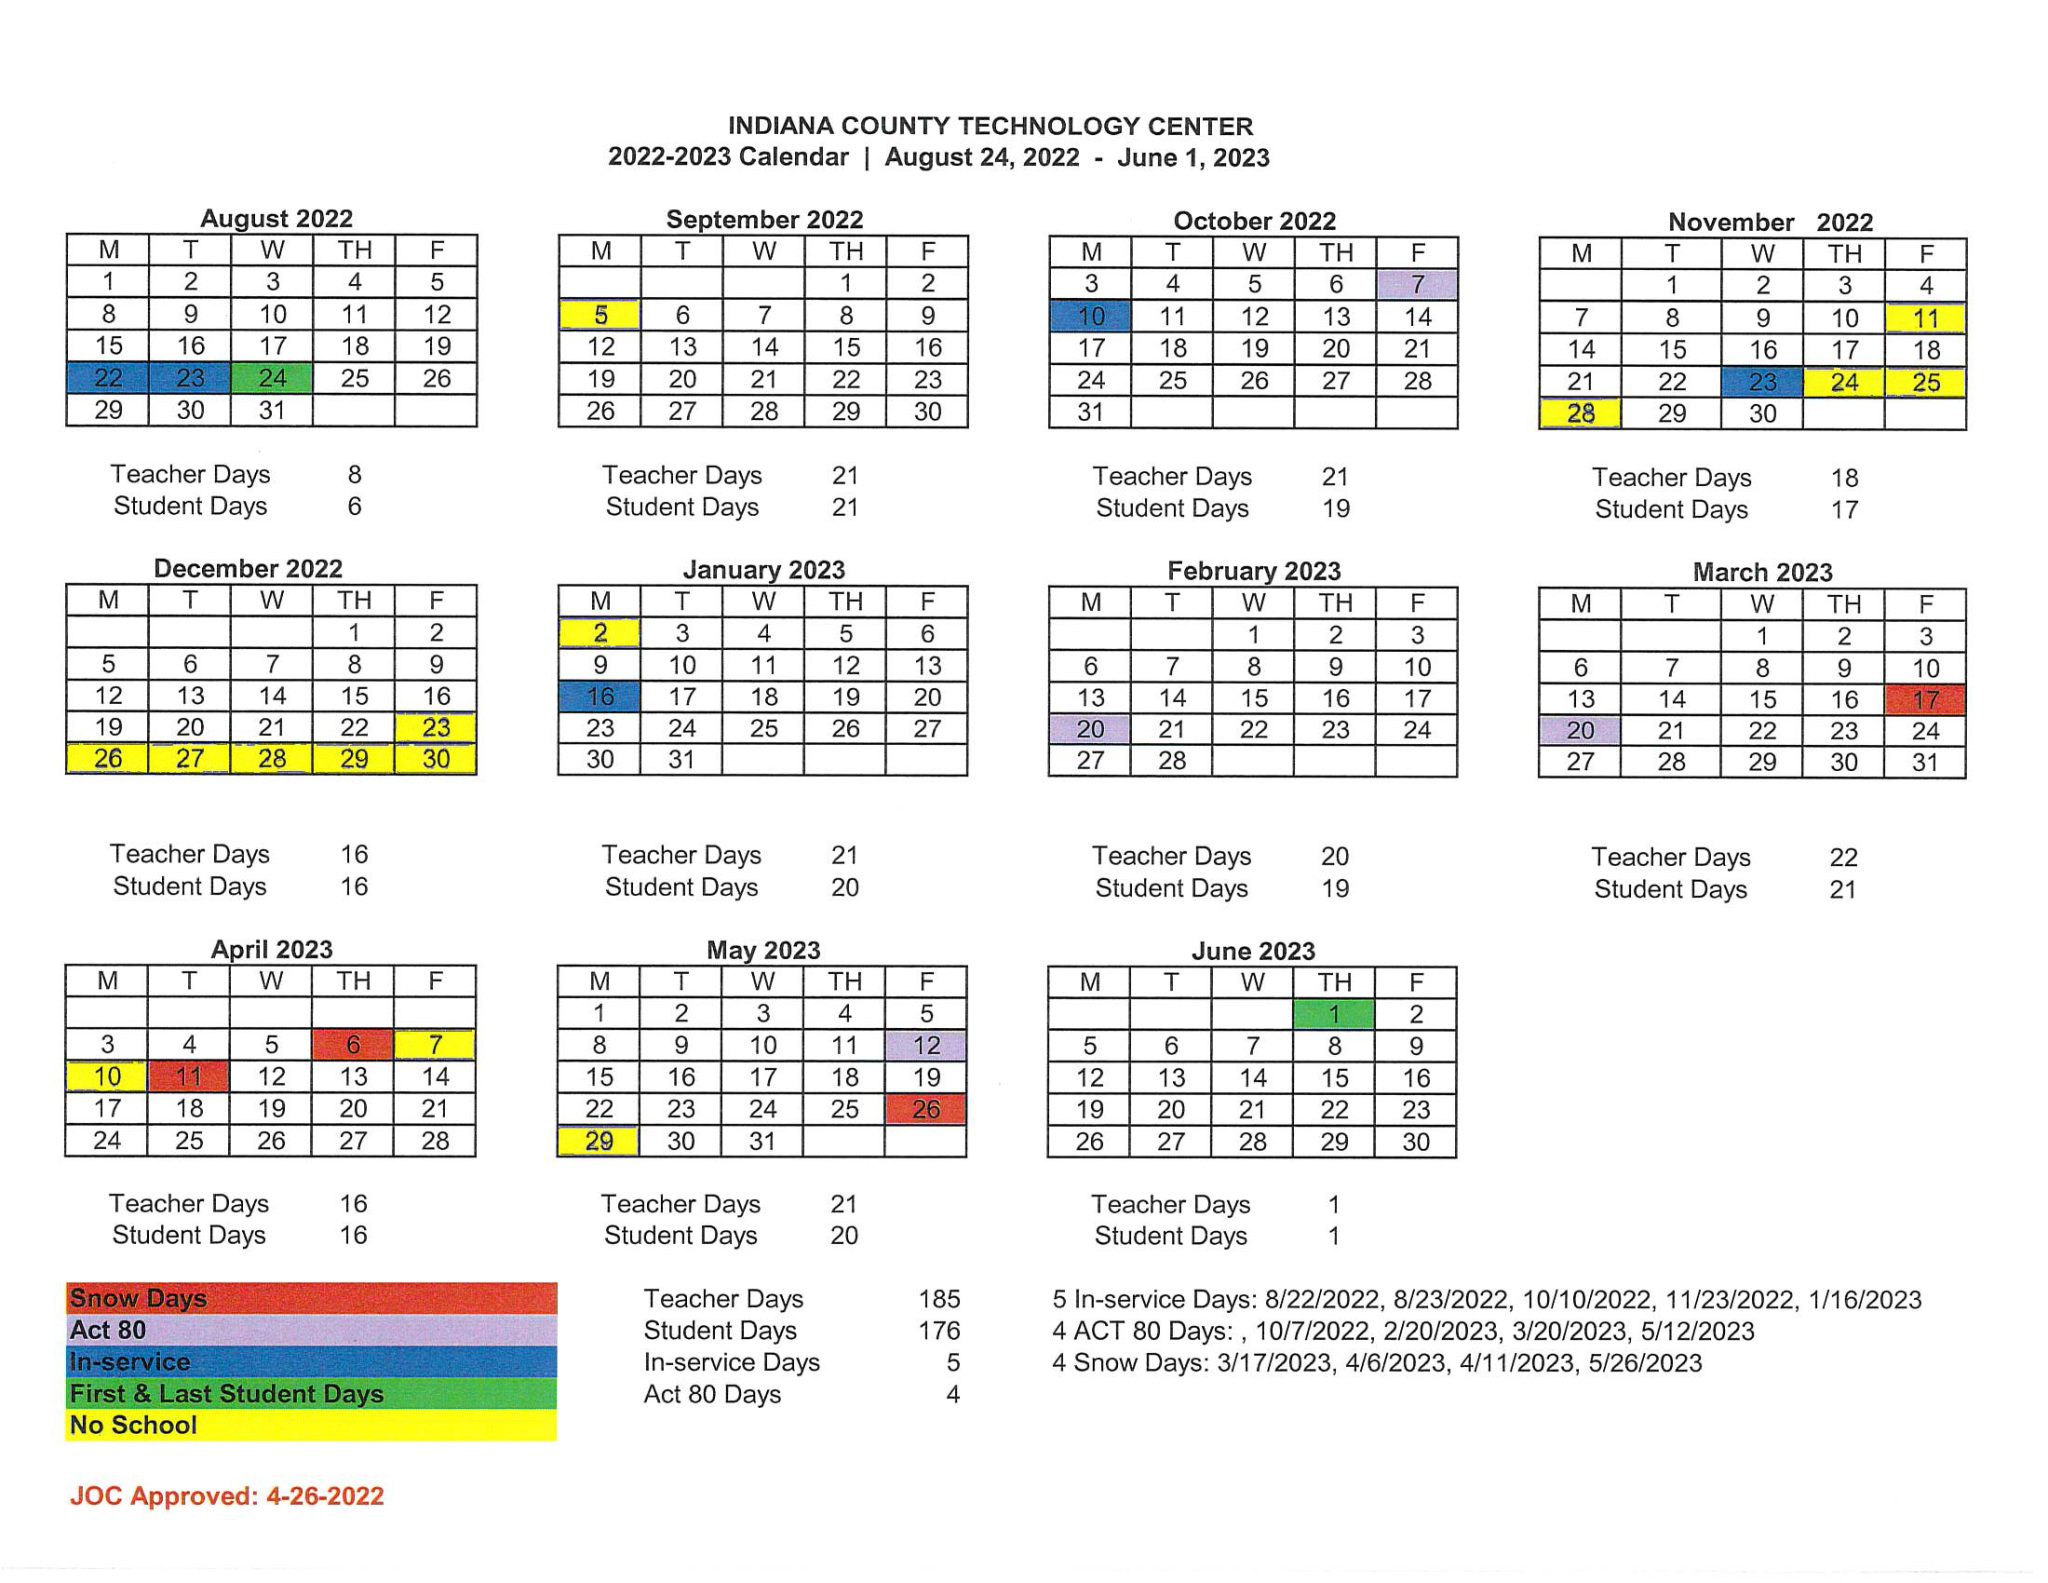 ictc-2022-2023-calendar-august-24-2022-june-1-2023-ictc